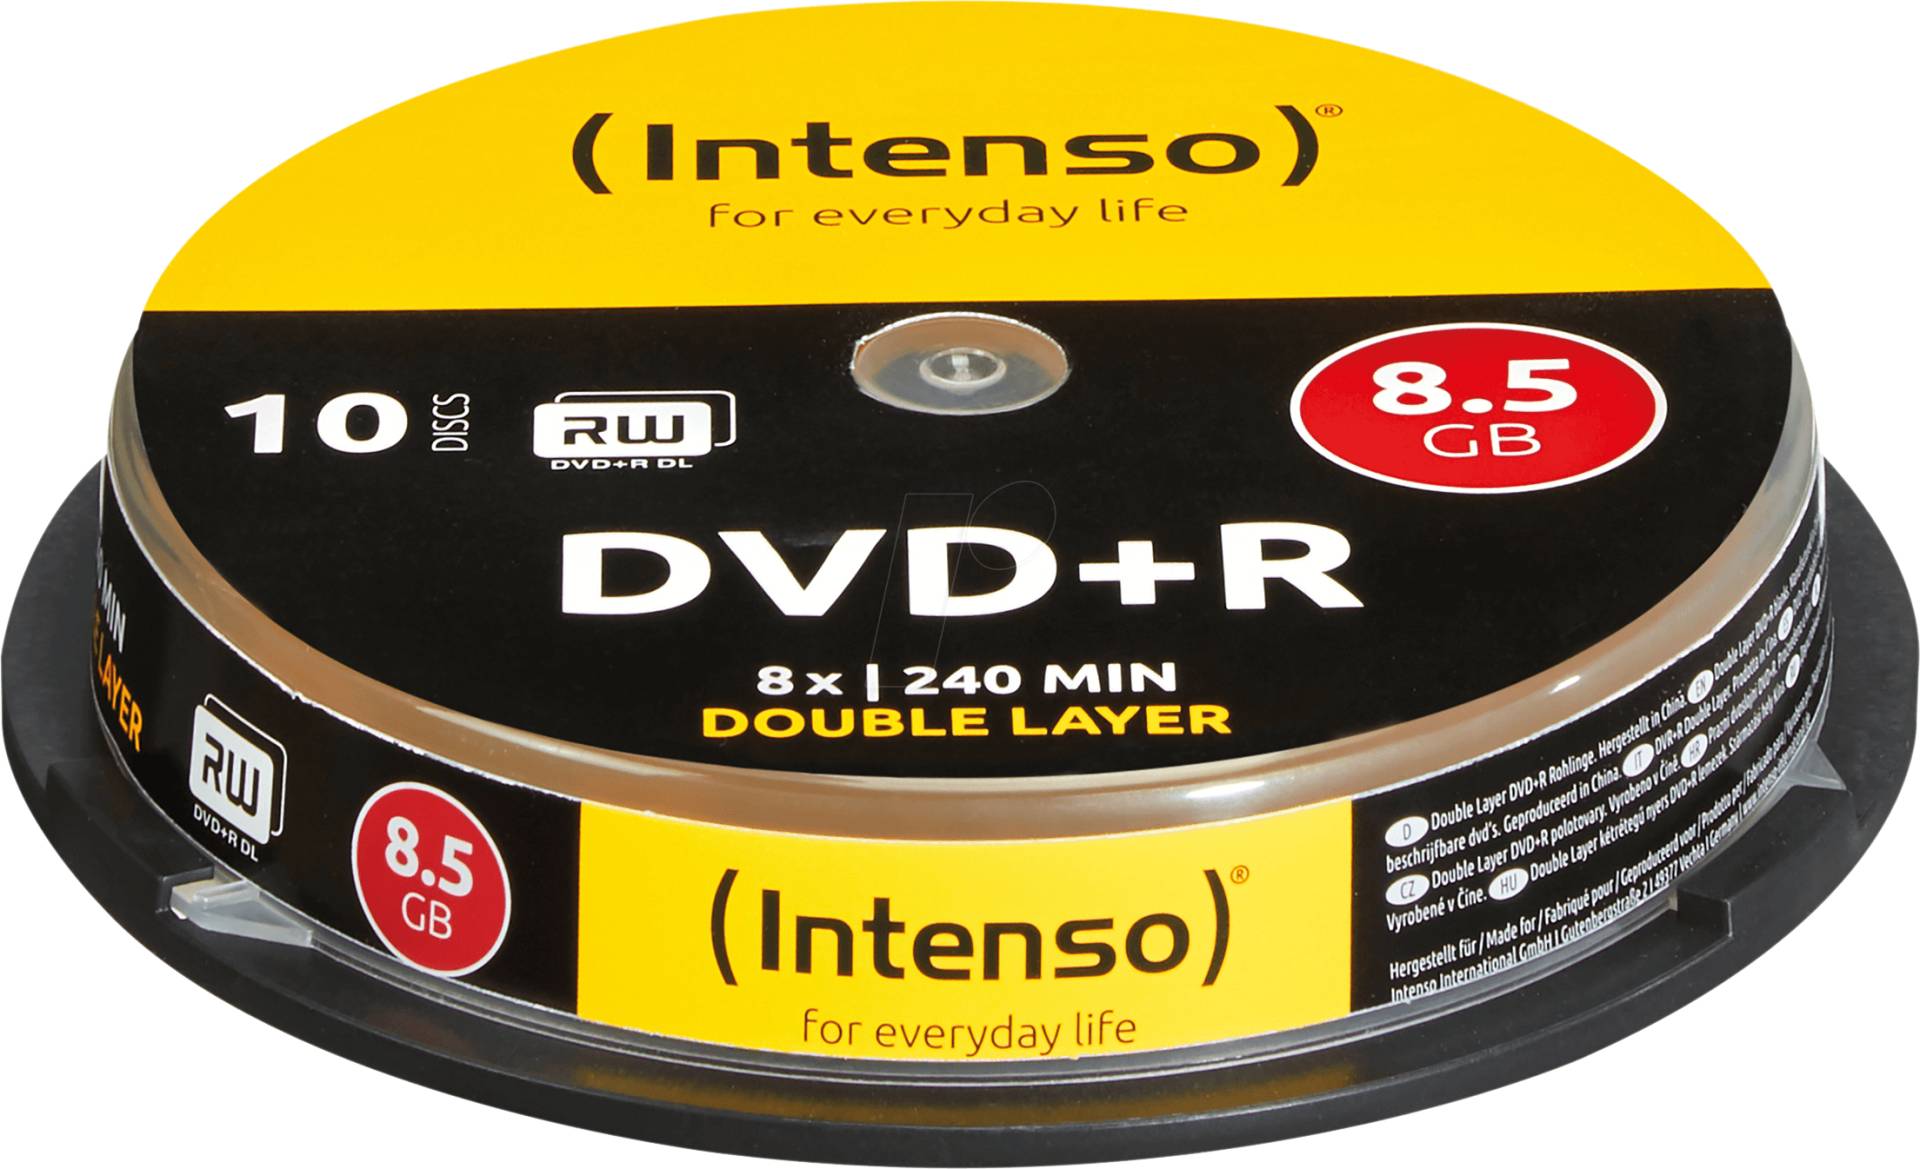 DVD+R8,5 INT10 - Intenso DVD+R 8,5GB, 10er Pack, DoubleLayer von Intenso